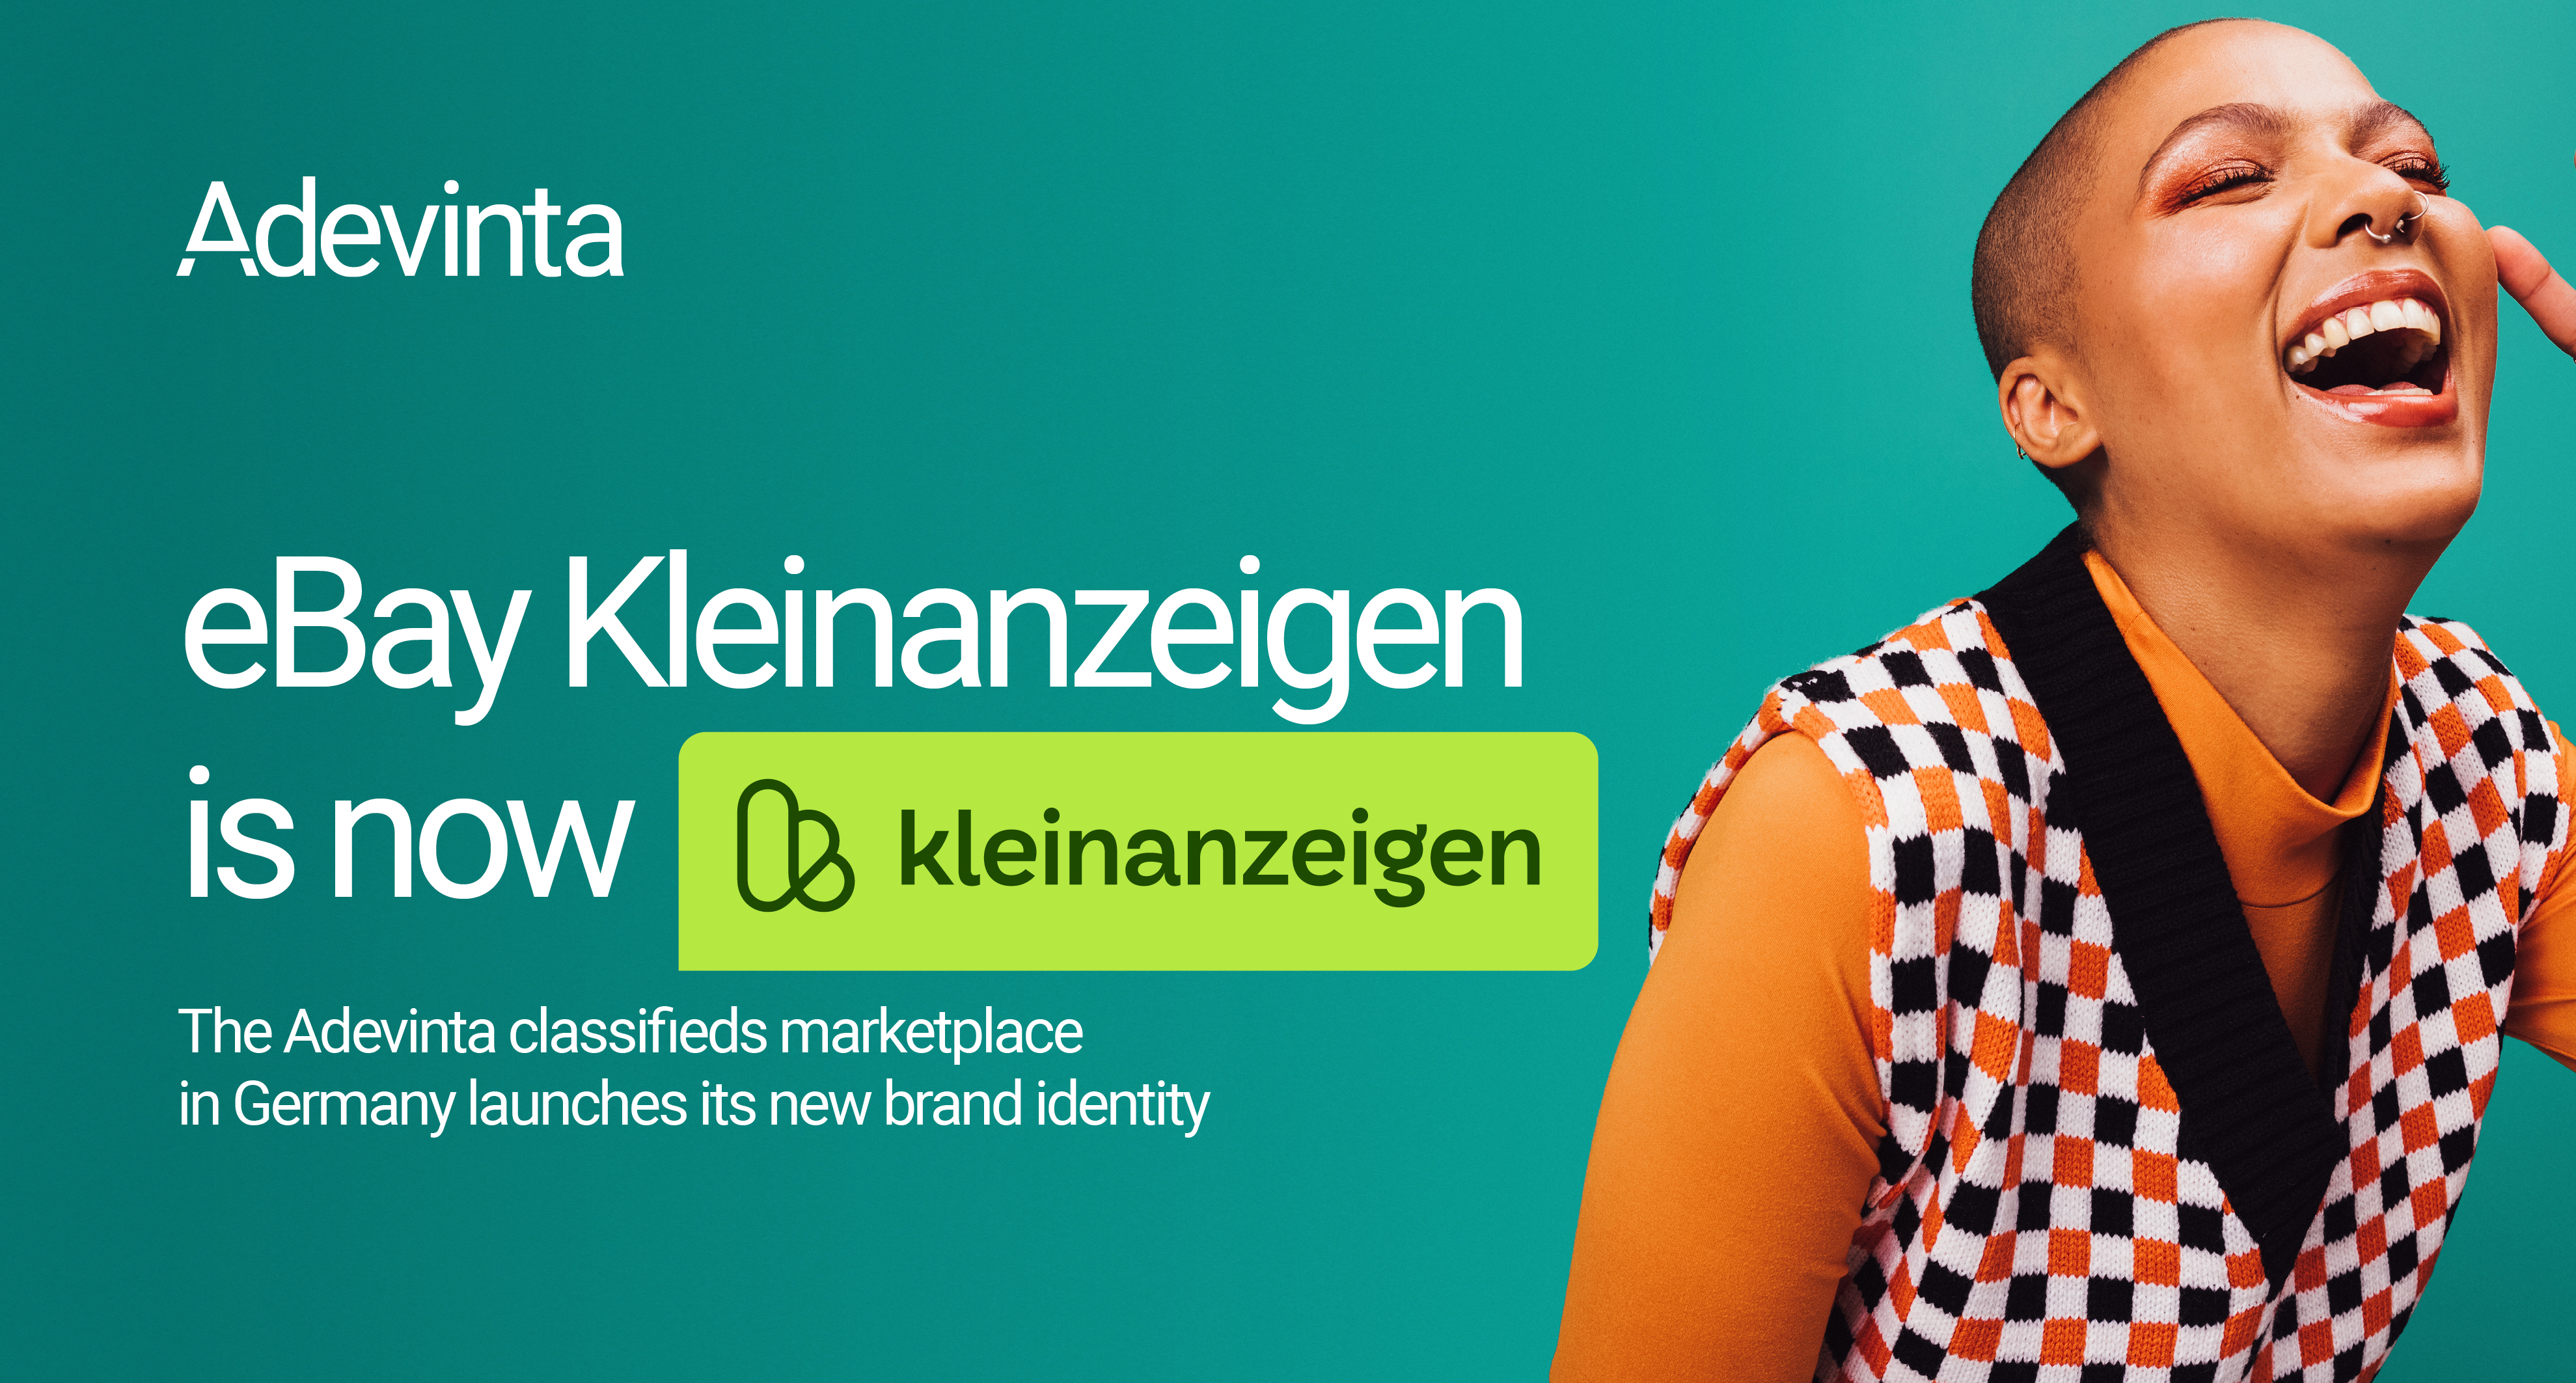 Kleinanzeigen: Contact Details and Business Profile